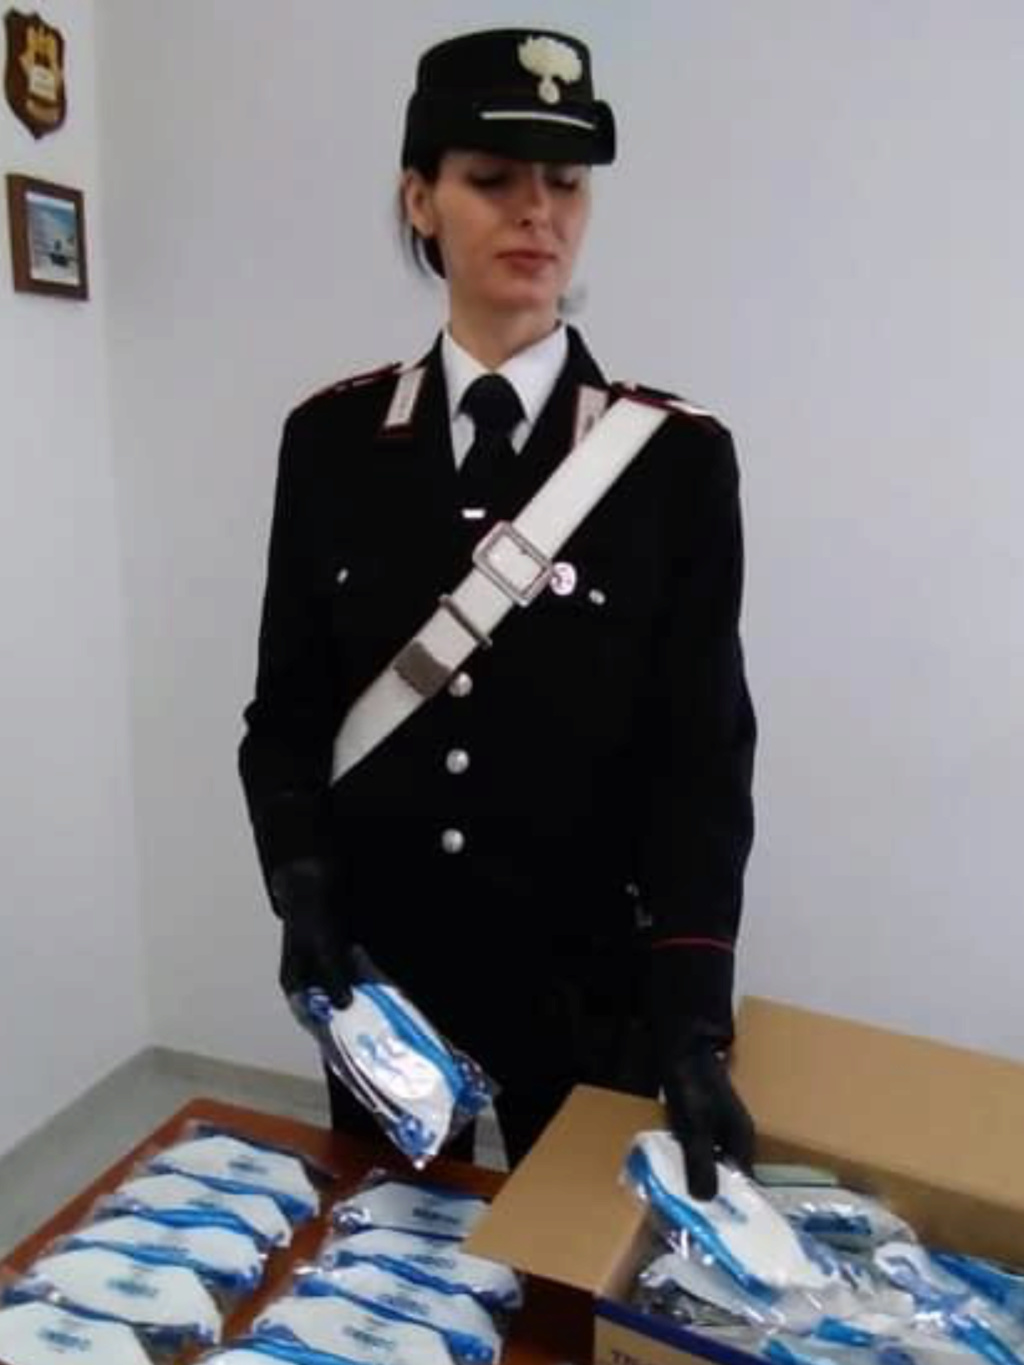 Italian Police Uniform 1311